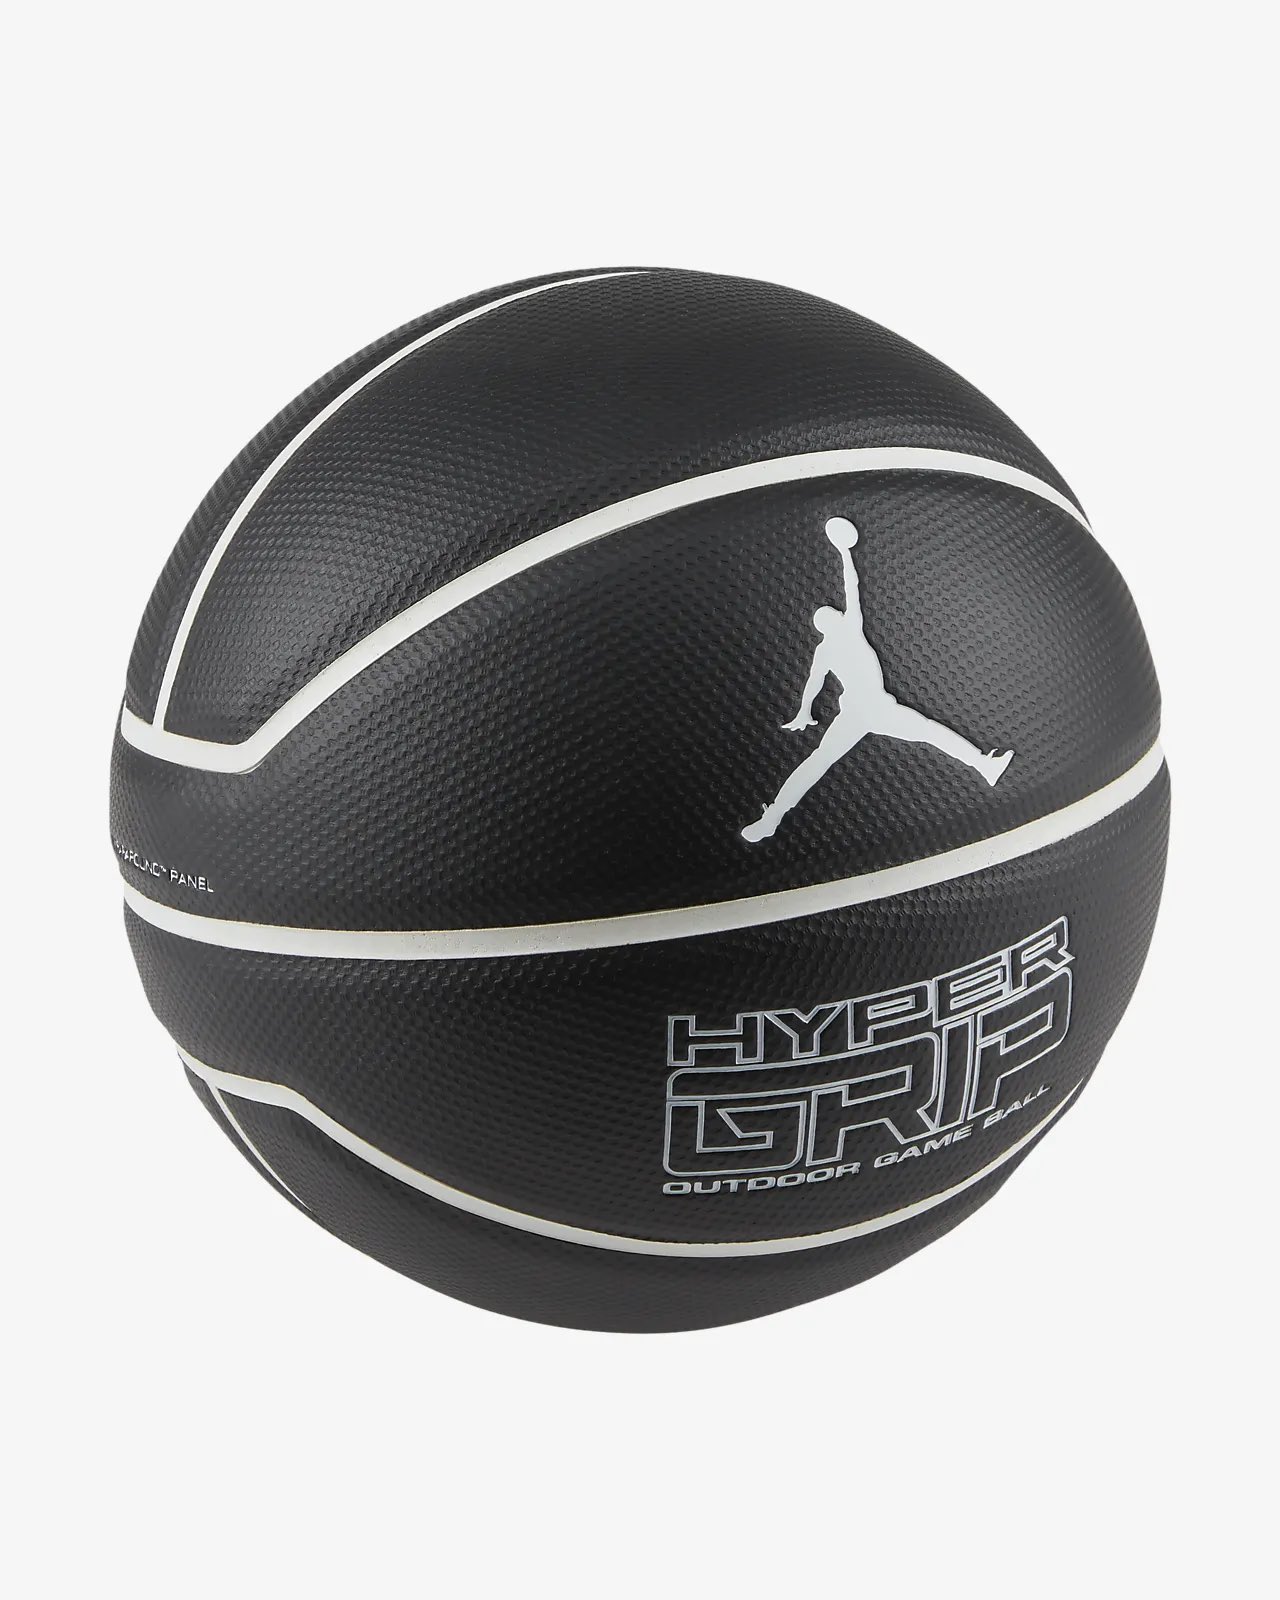 SNKR_TWITR on Twitter: "Jordan Hyper Basketball Size 7 on Nike US Shop -&gt; https://t.co/R8eW1biYUb #AD https://t.co/5FB6KKFb31" / Twitter